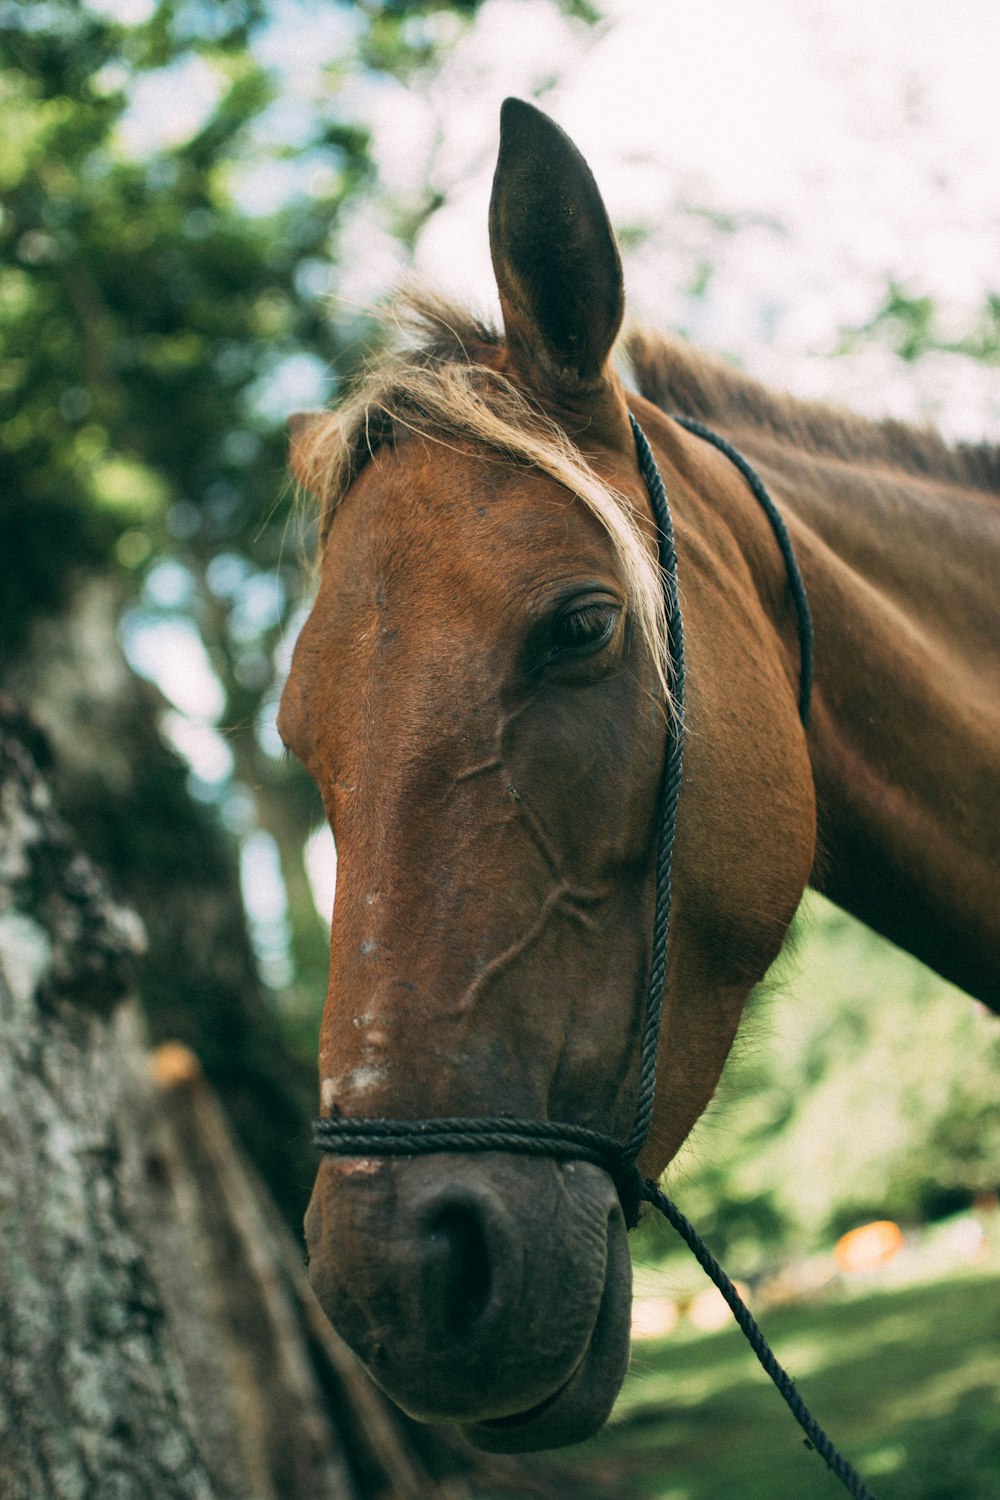 a close up of a horse near a tree